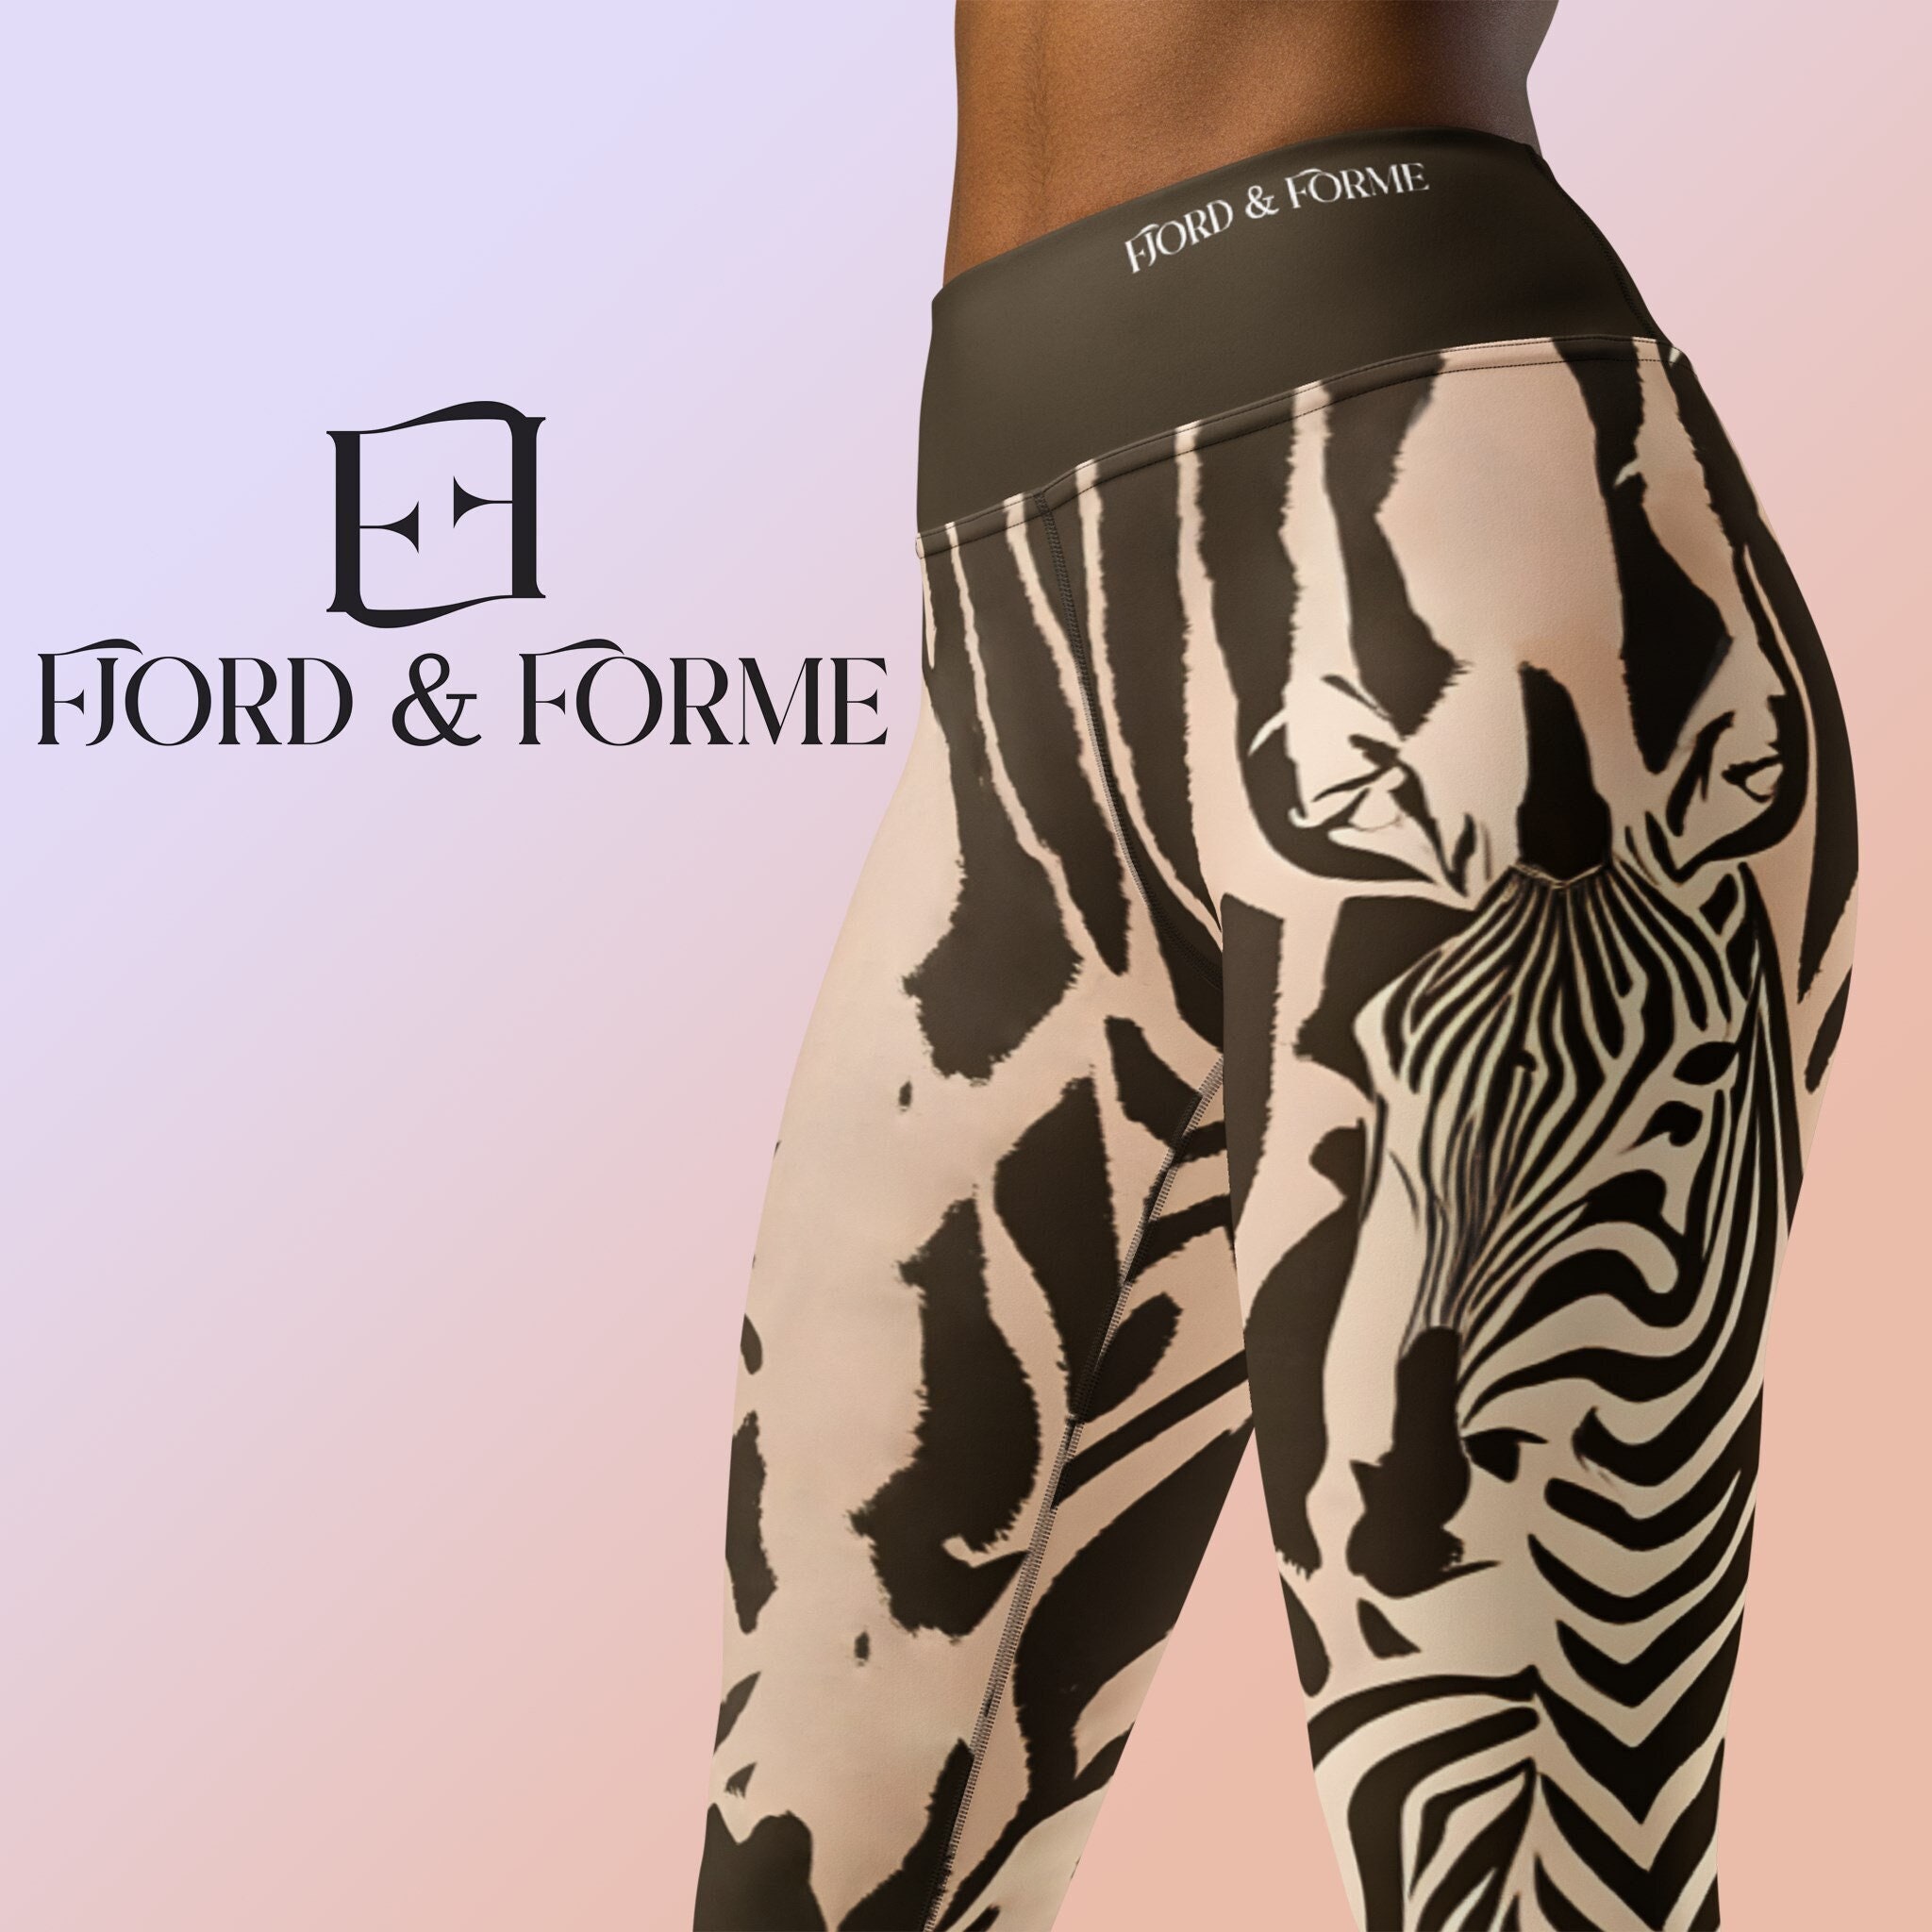 Cream Black Zebra Print Pants, Flare Leggings, Bootleg Yoga Pants, Bootcut  Leggings, Zebra Print Clothing, Printed Tights -  Canada